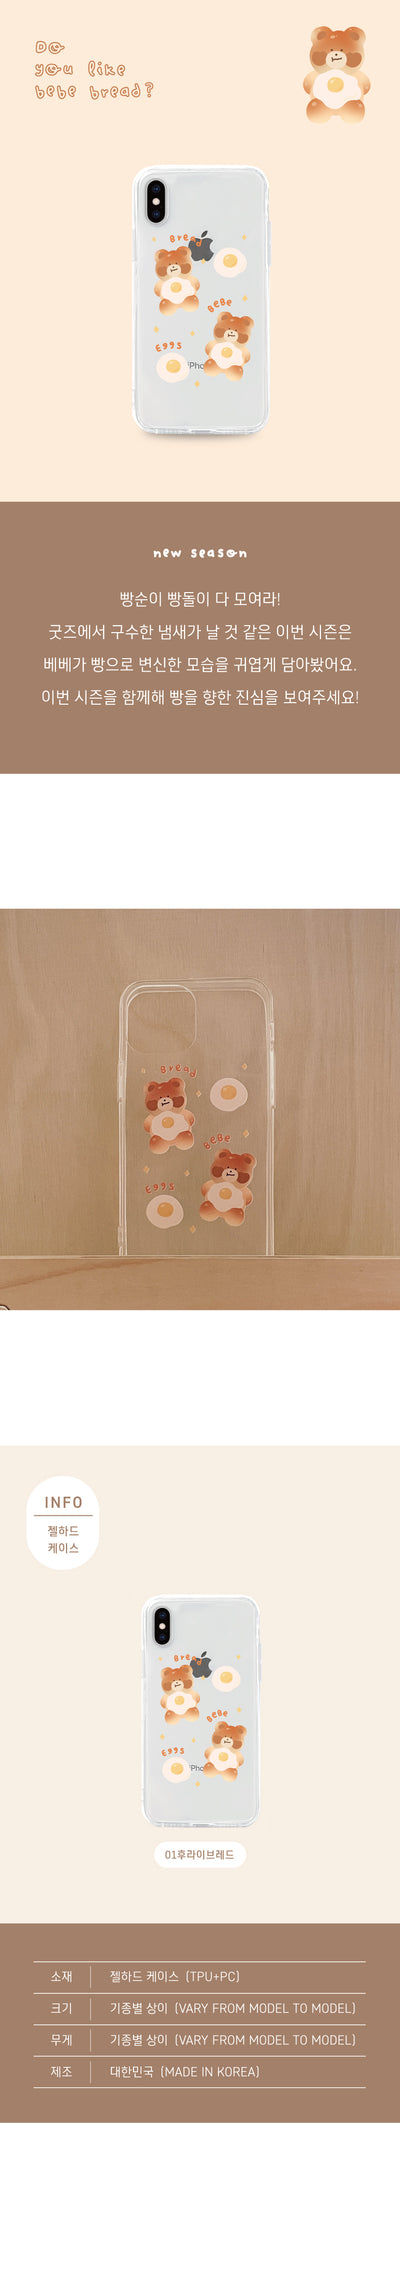 Fried egg bread smartphone case